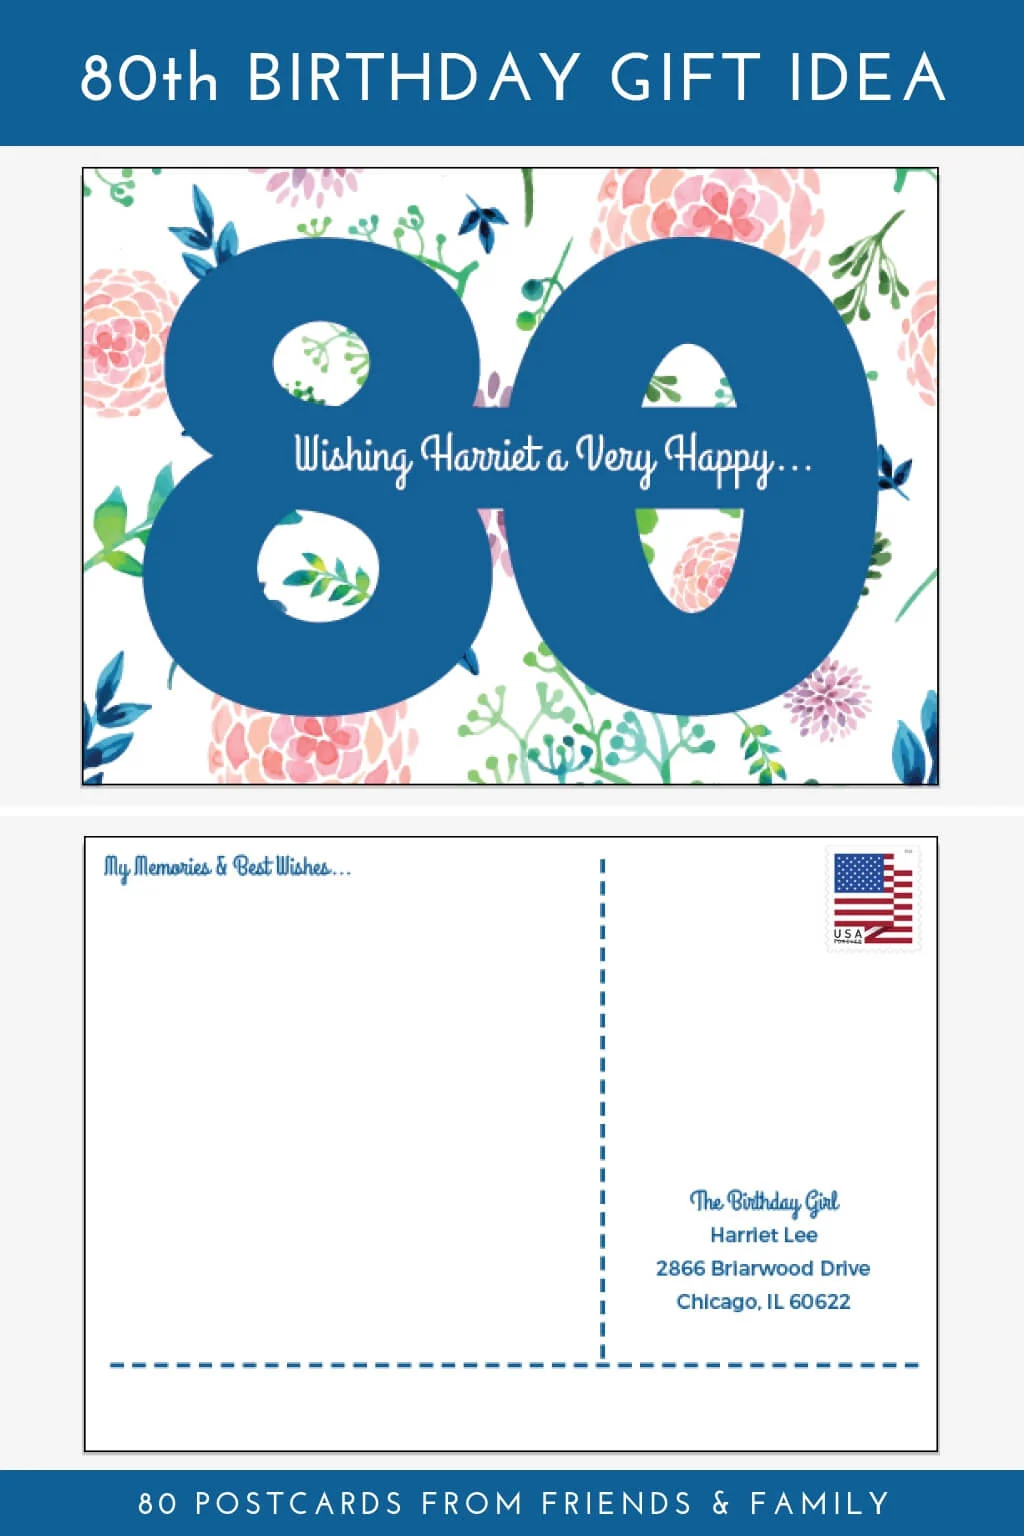 80th birthday postcards gift idea